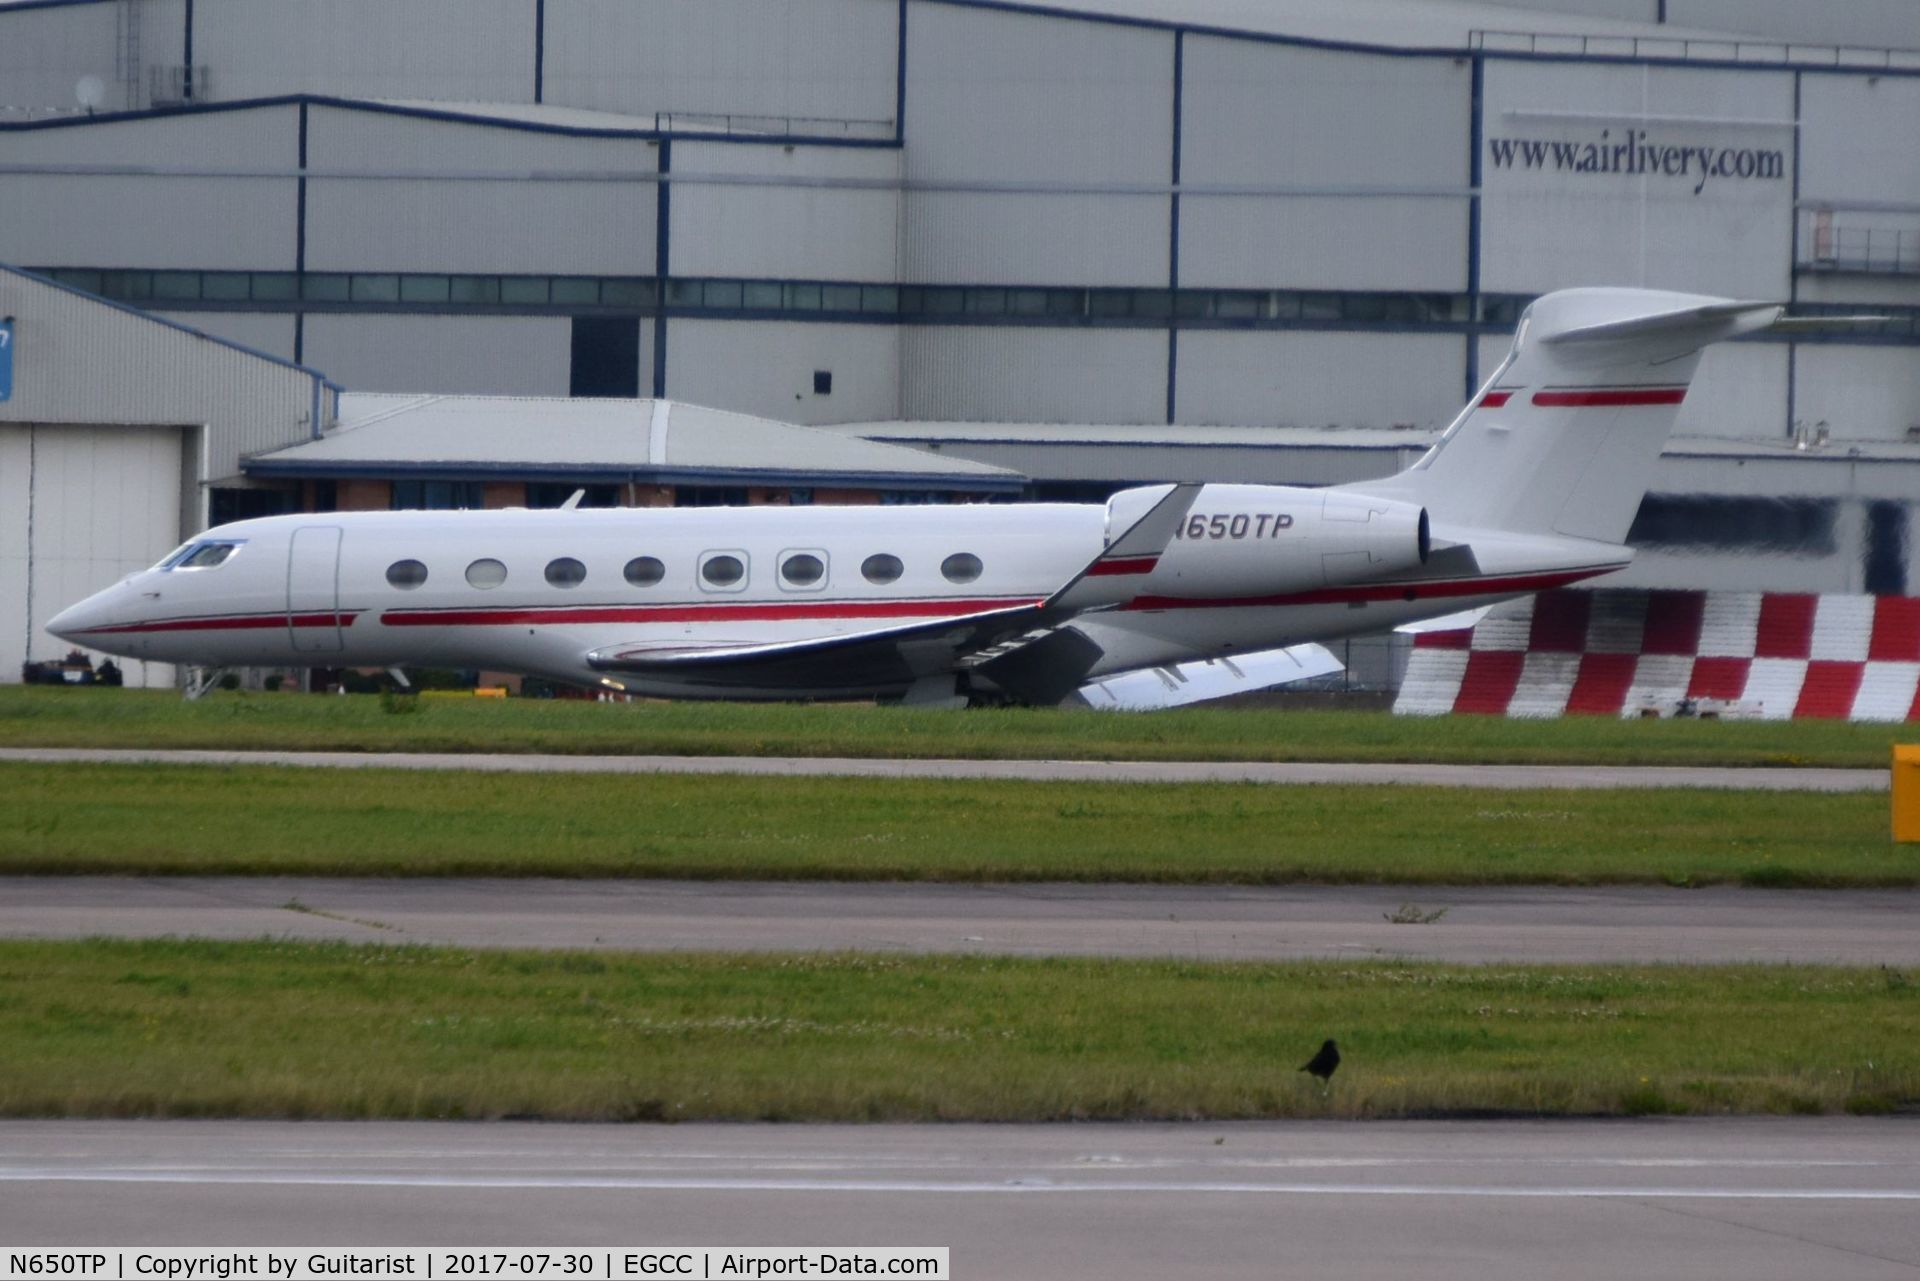 N650TP, 2013 Gulfstream Aerospace G650 (G-VI) C/N 6051, At Manchester